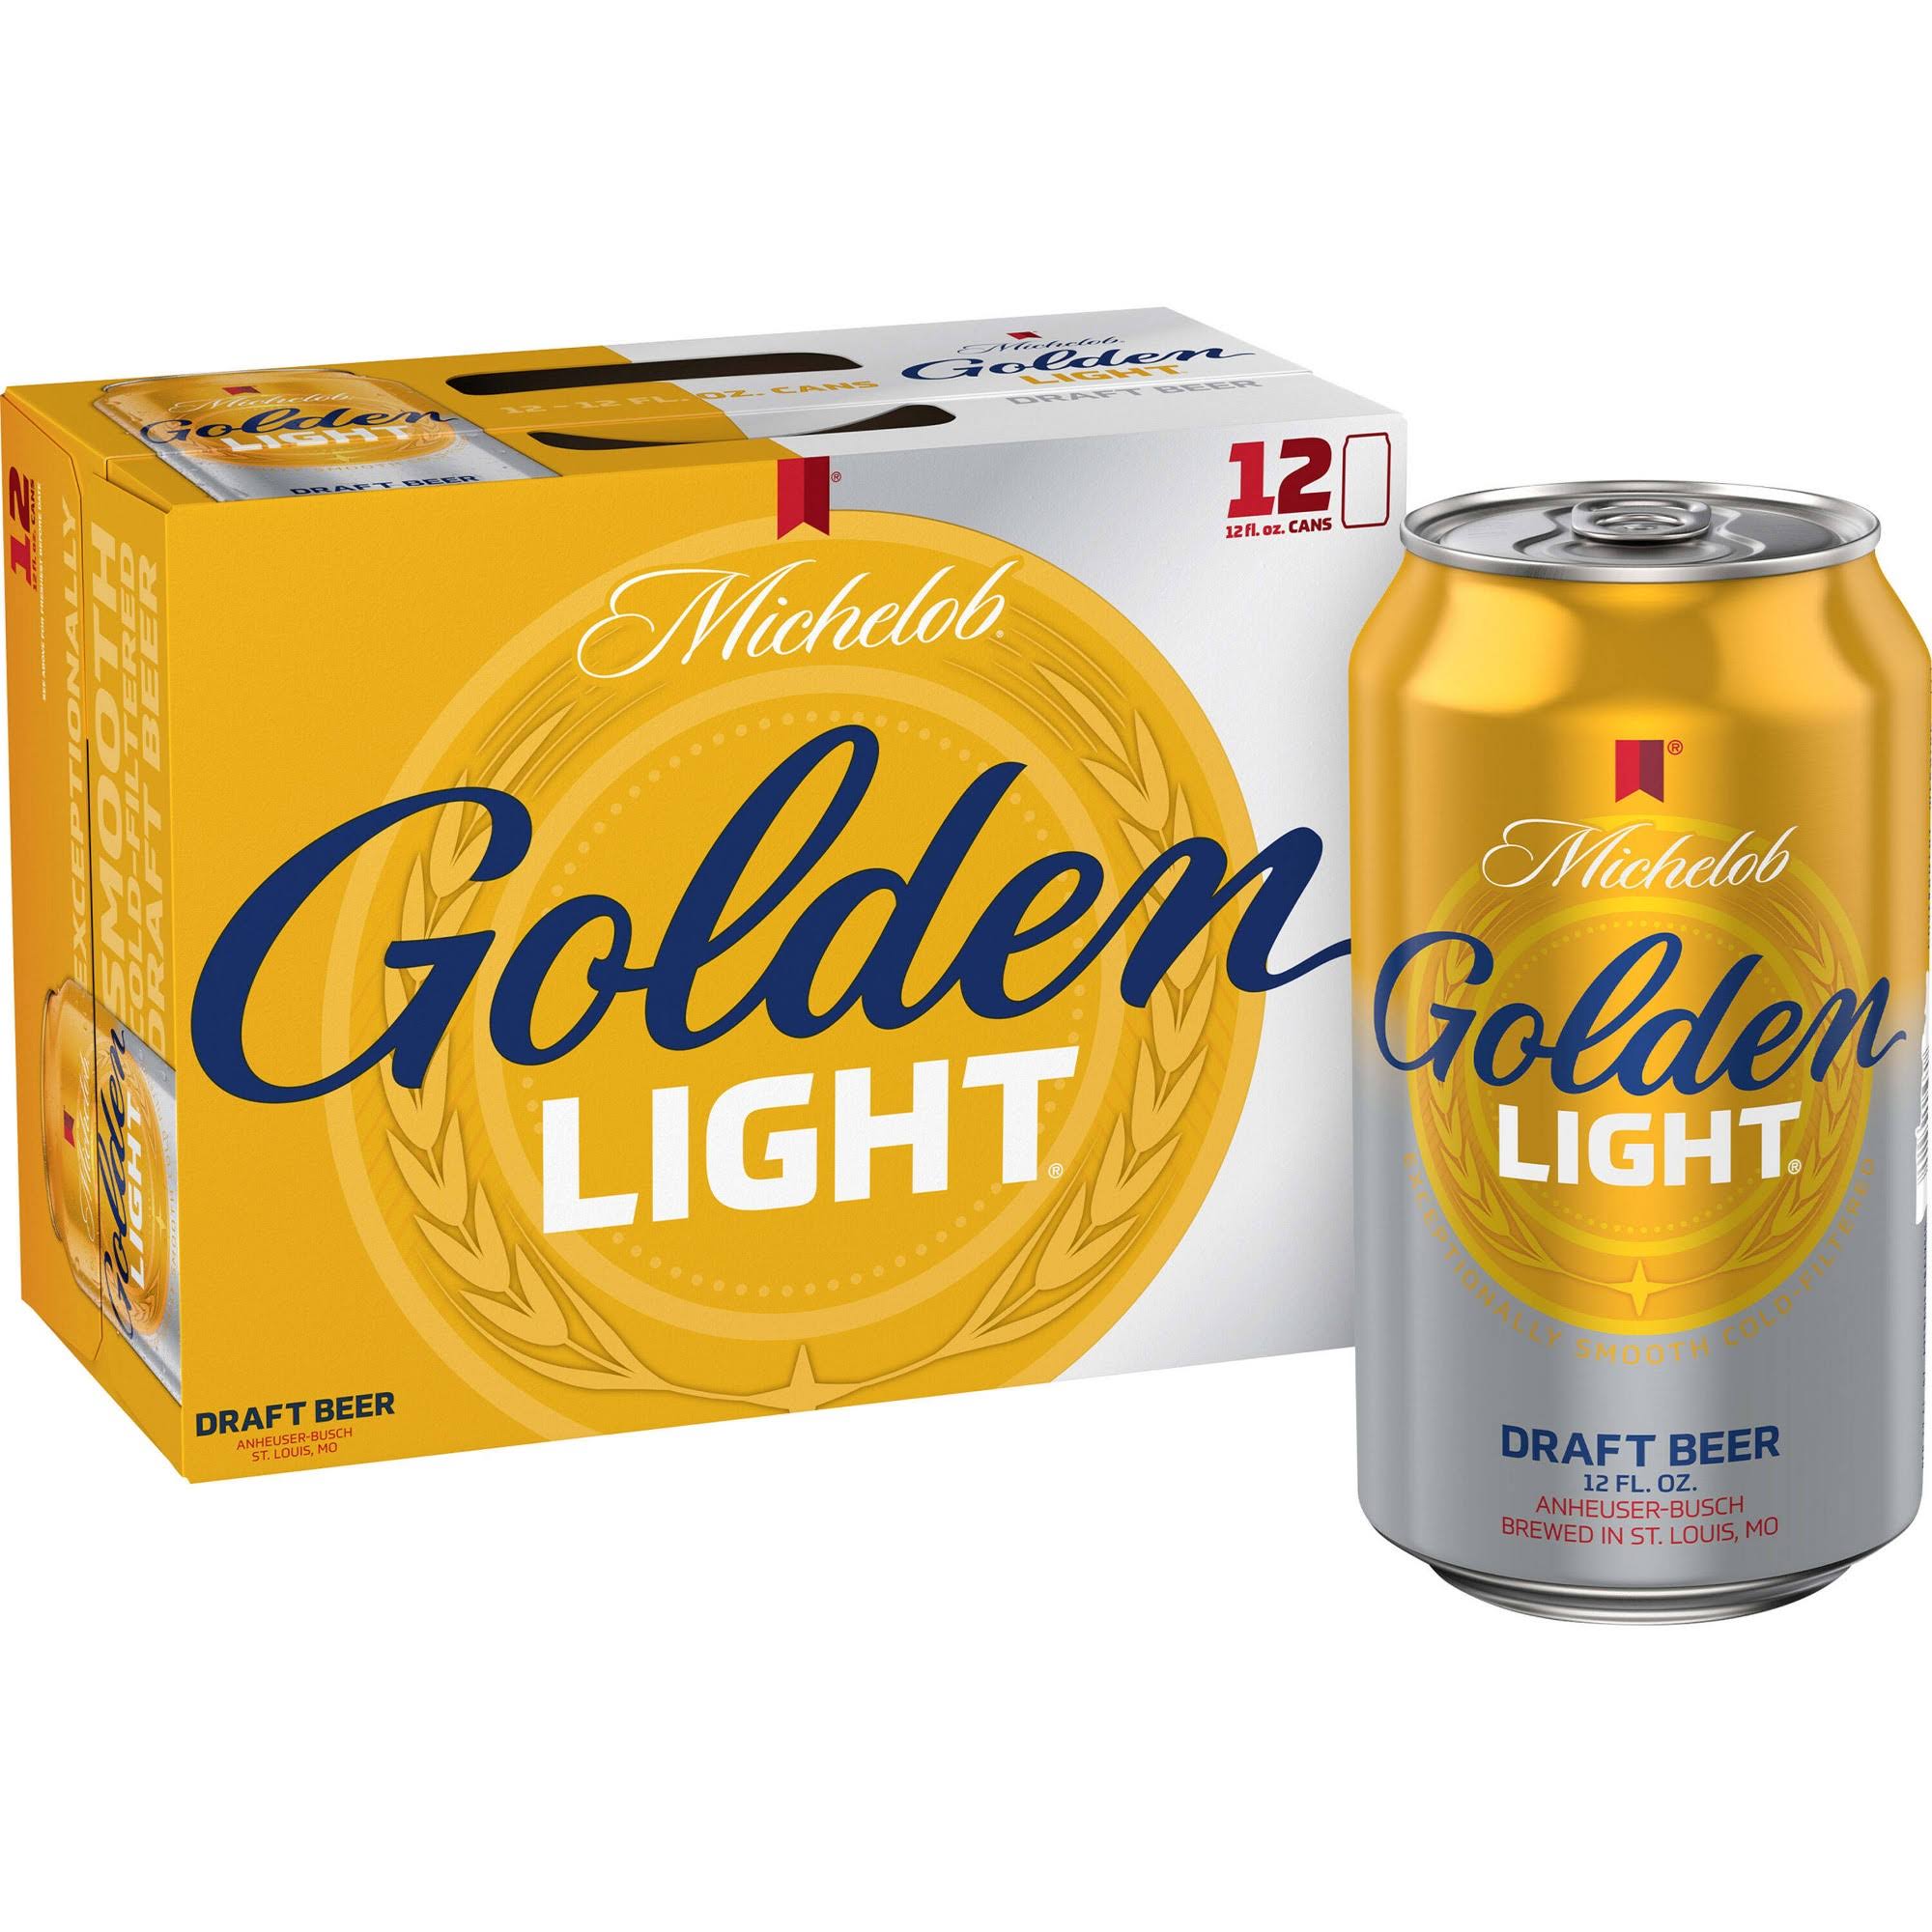 Michelob Golden Light Draft Beer - 12pk, 12oz